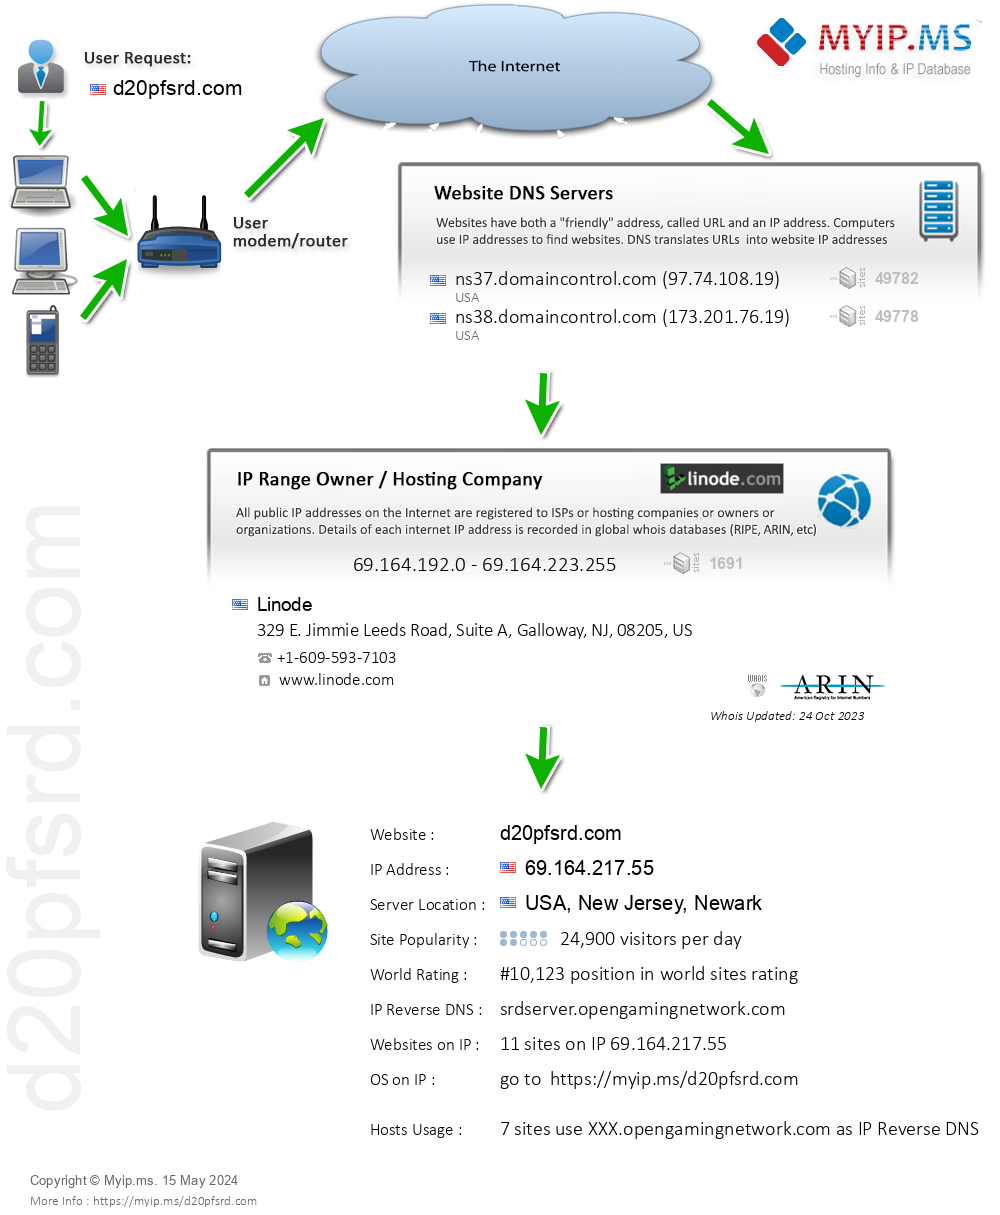 D20pfsrd.com - Website Hosting Visual IP Diagram